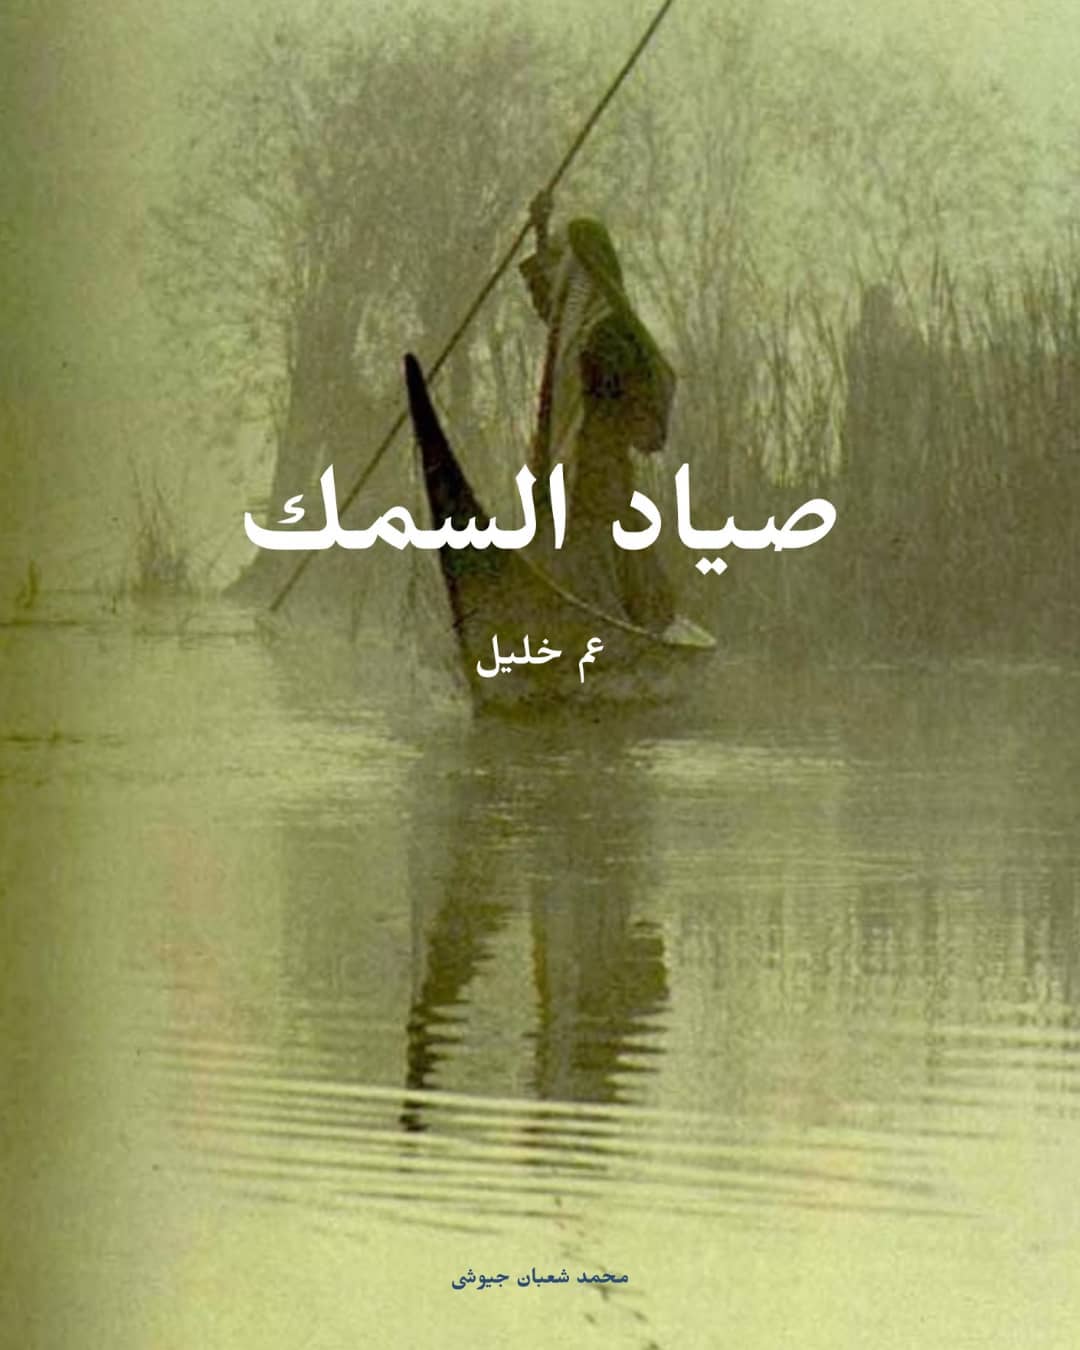 mero sadekالحلقه الثالثه من عم خليل الصياد تأليف محمد شعبان جيوشى اداء صوتى